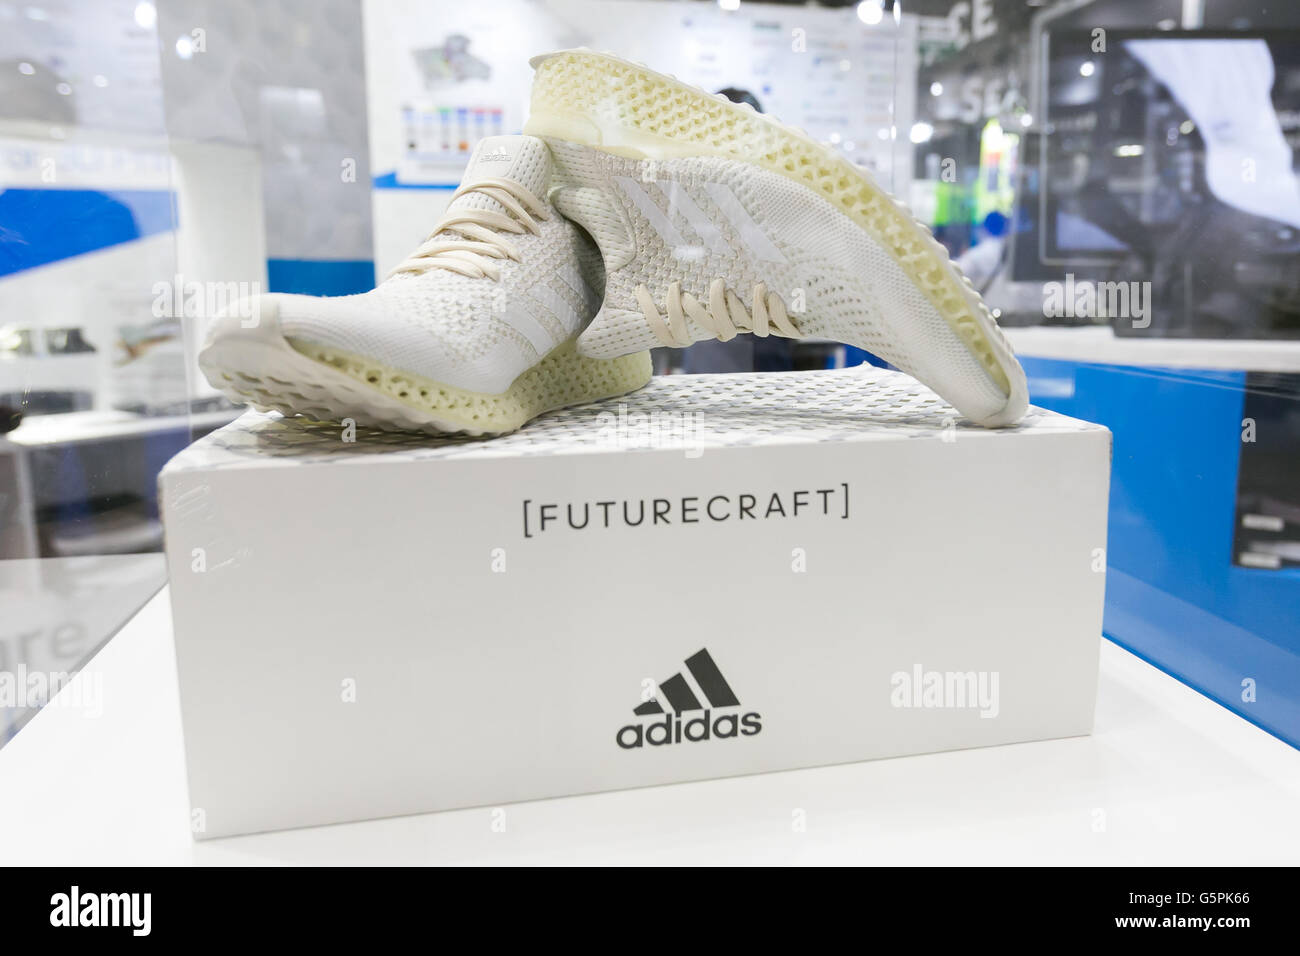 adidas futurecraft japan